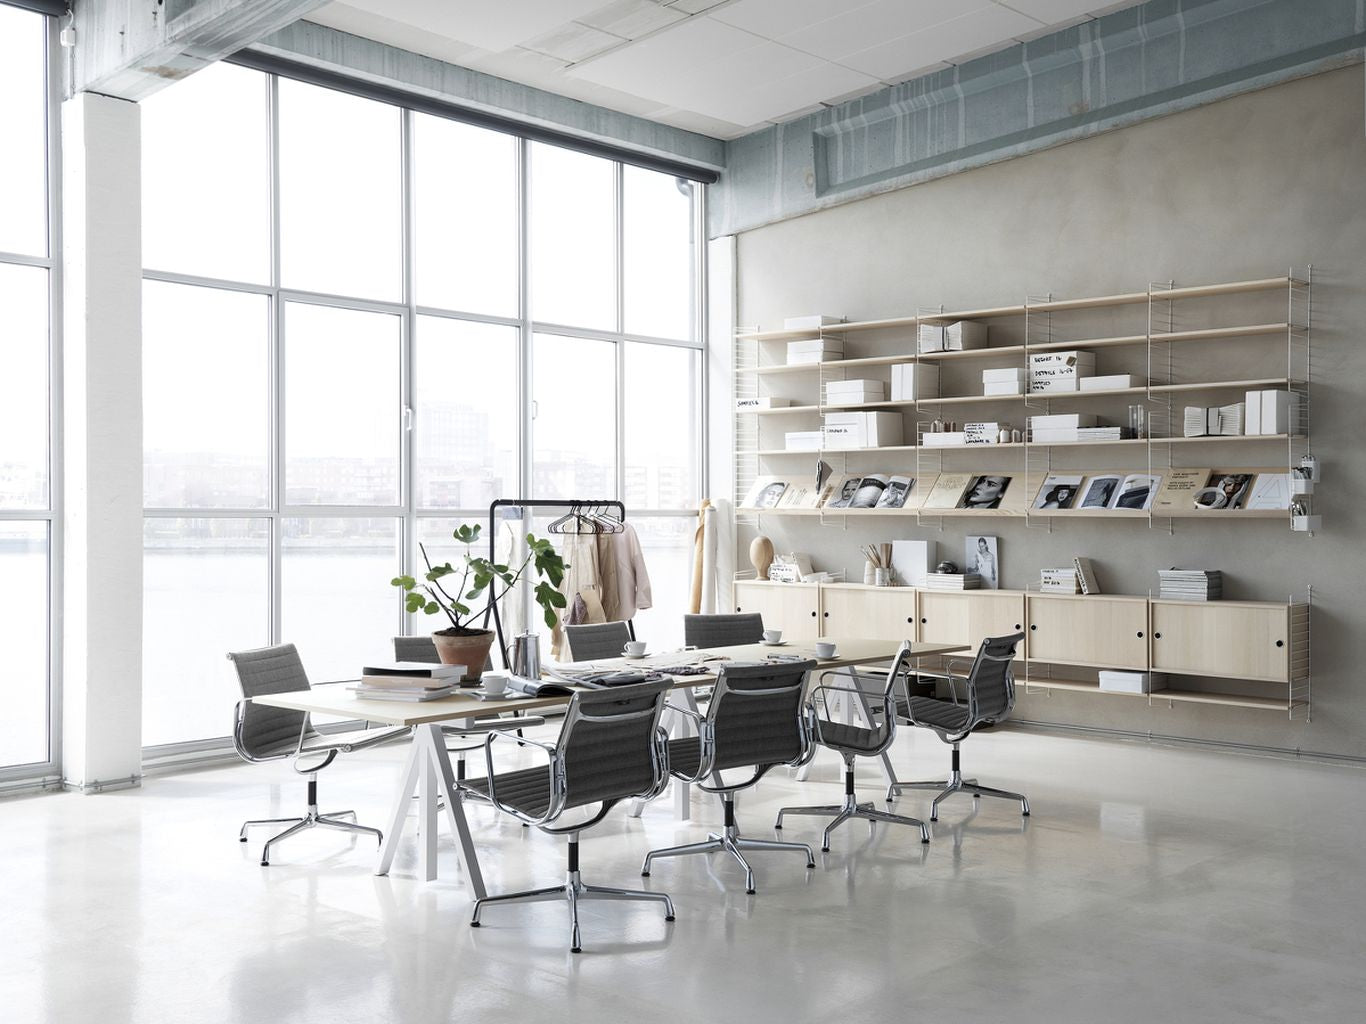 String Furniture Fungerar höjd justerbar mötesbord ek, 90x180 cm